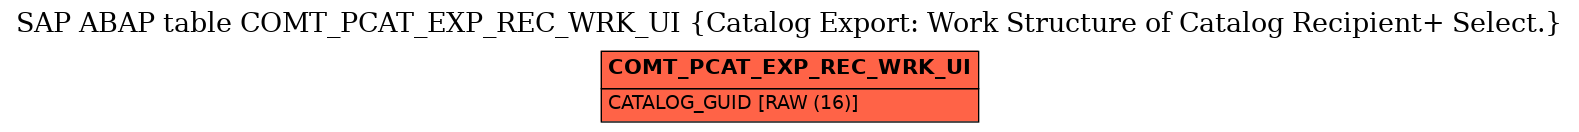 E-R Diagram for table COMT_PCAT_EXP_REC_WRK_UI (Catalog Export: Work Structure of Catalog Recipient+ Select.)